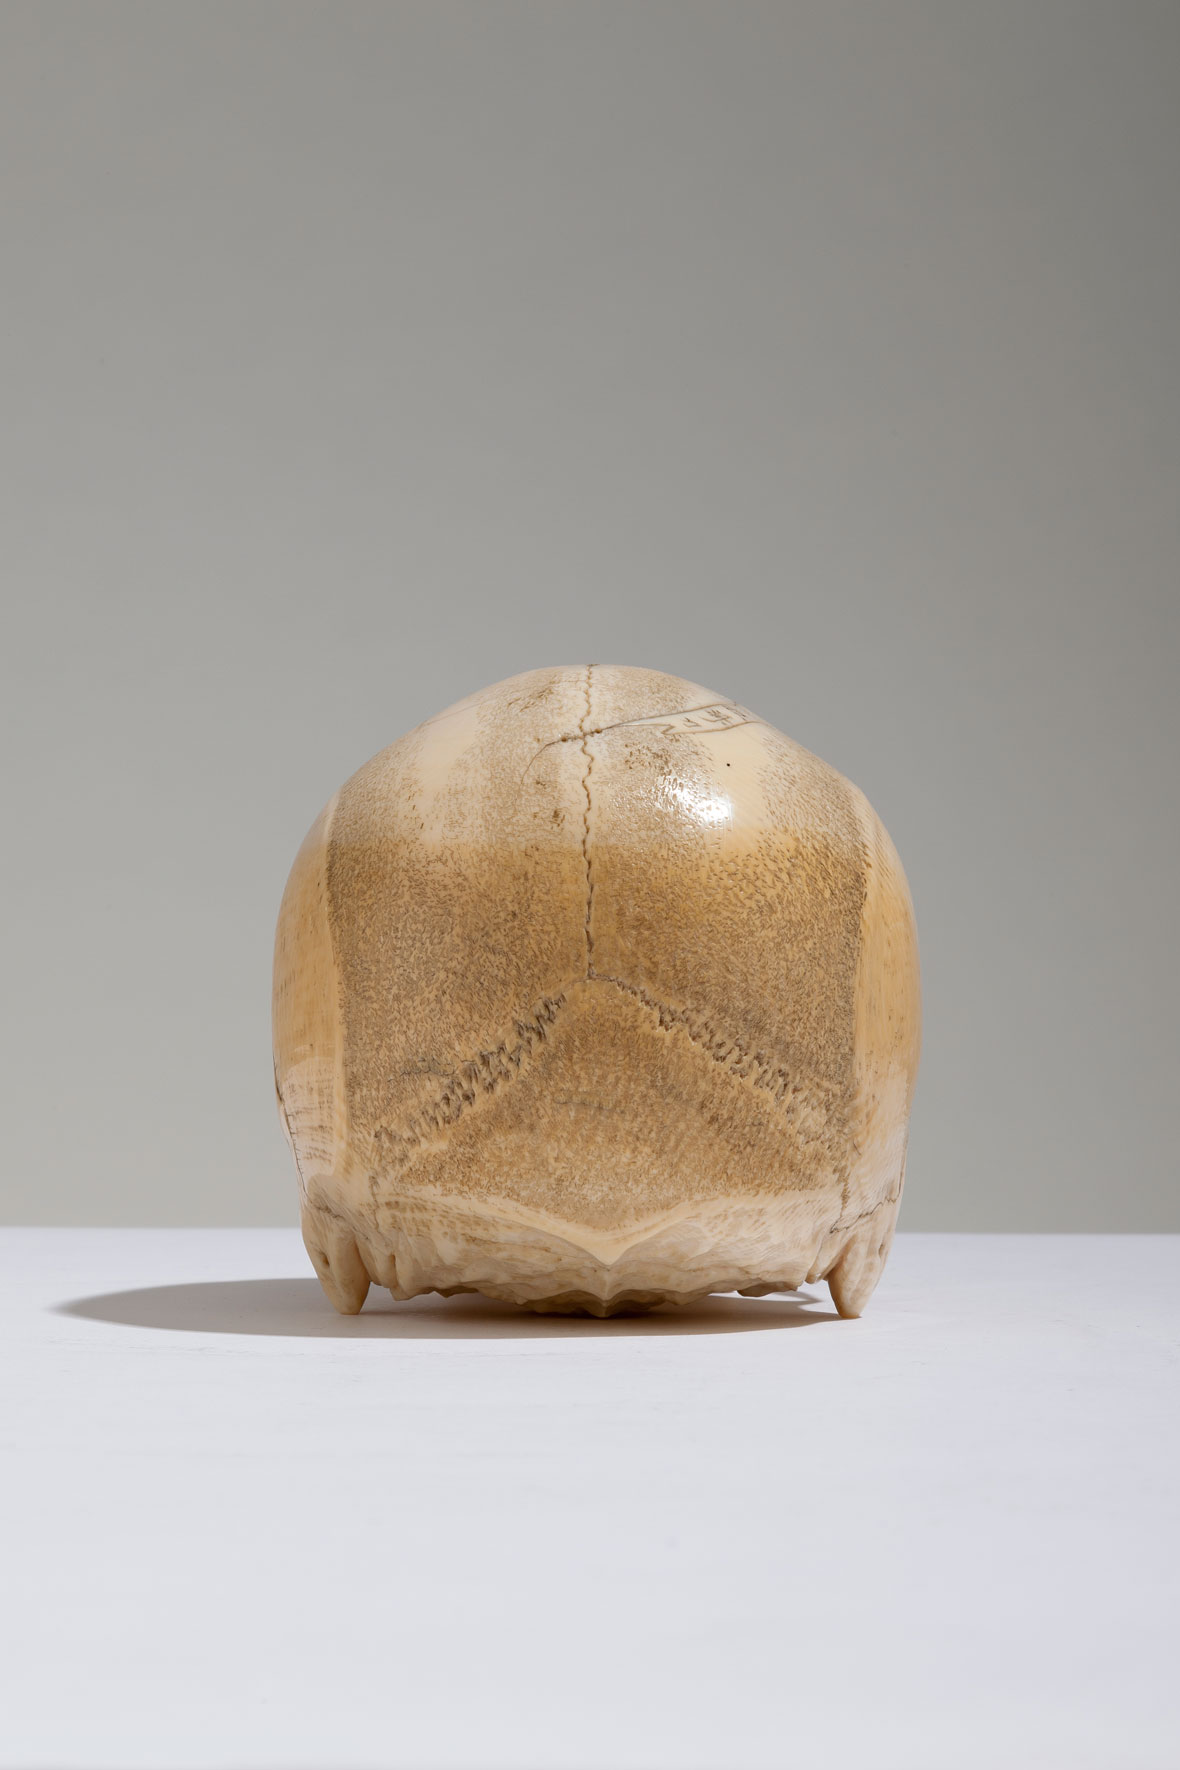 Japanese Ivory Skull by Shosai